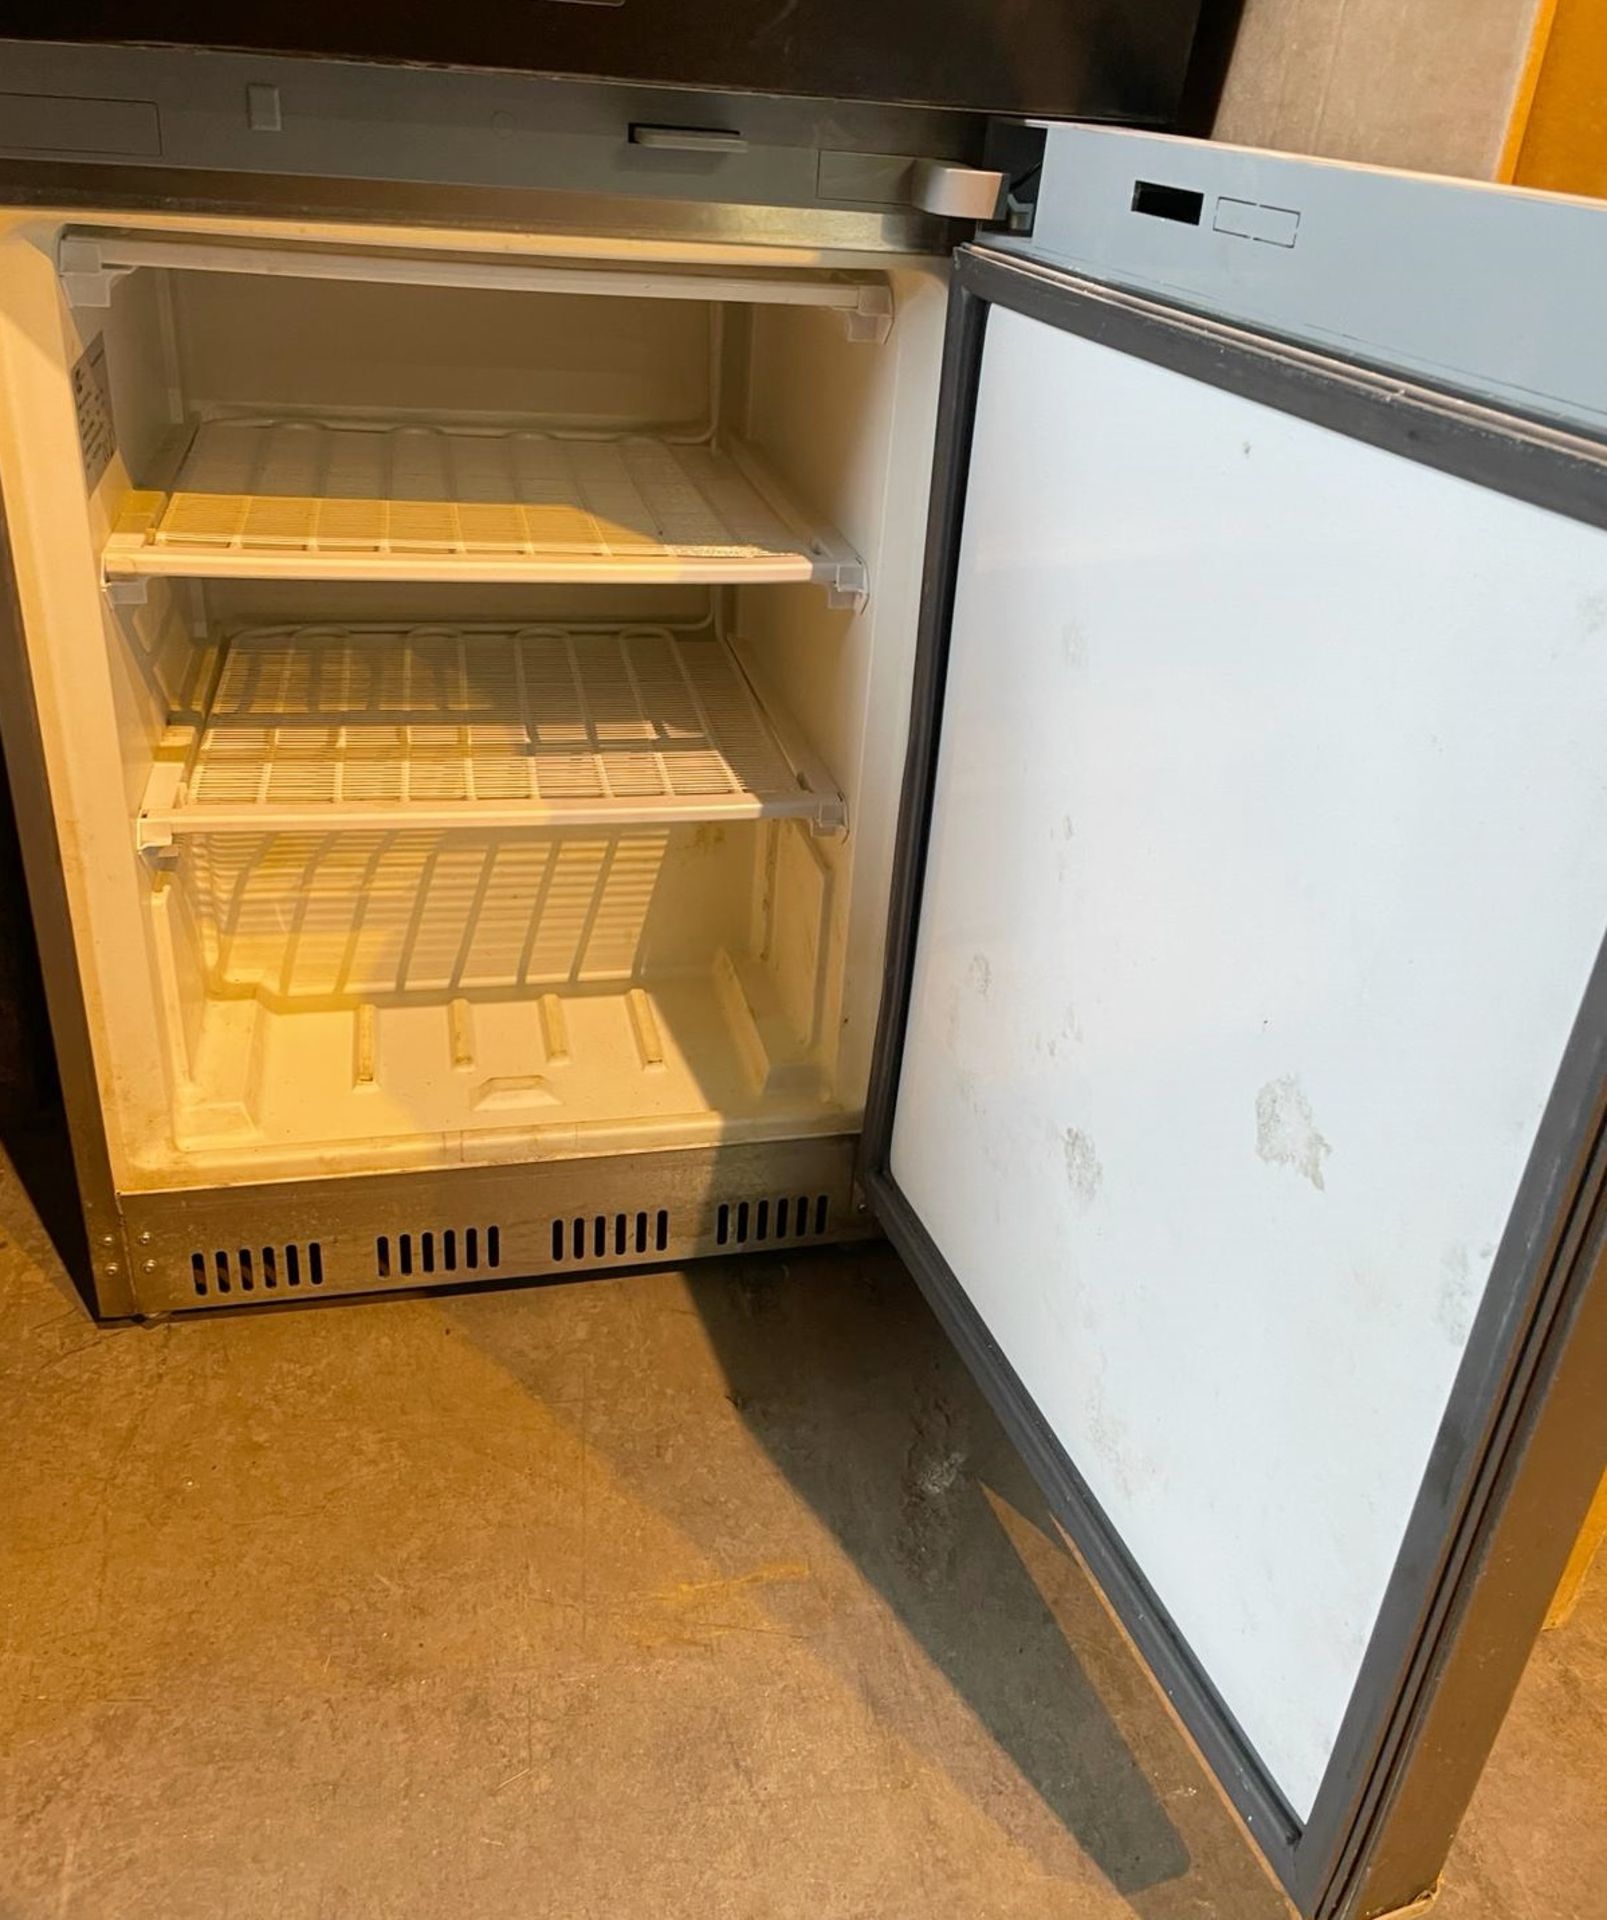 1 x Capital Royal Mk2 200LS Undercounter Freezer - Year 2019 - Image 3 of 6